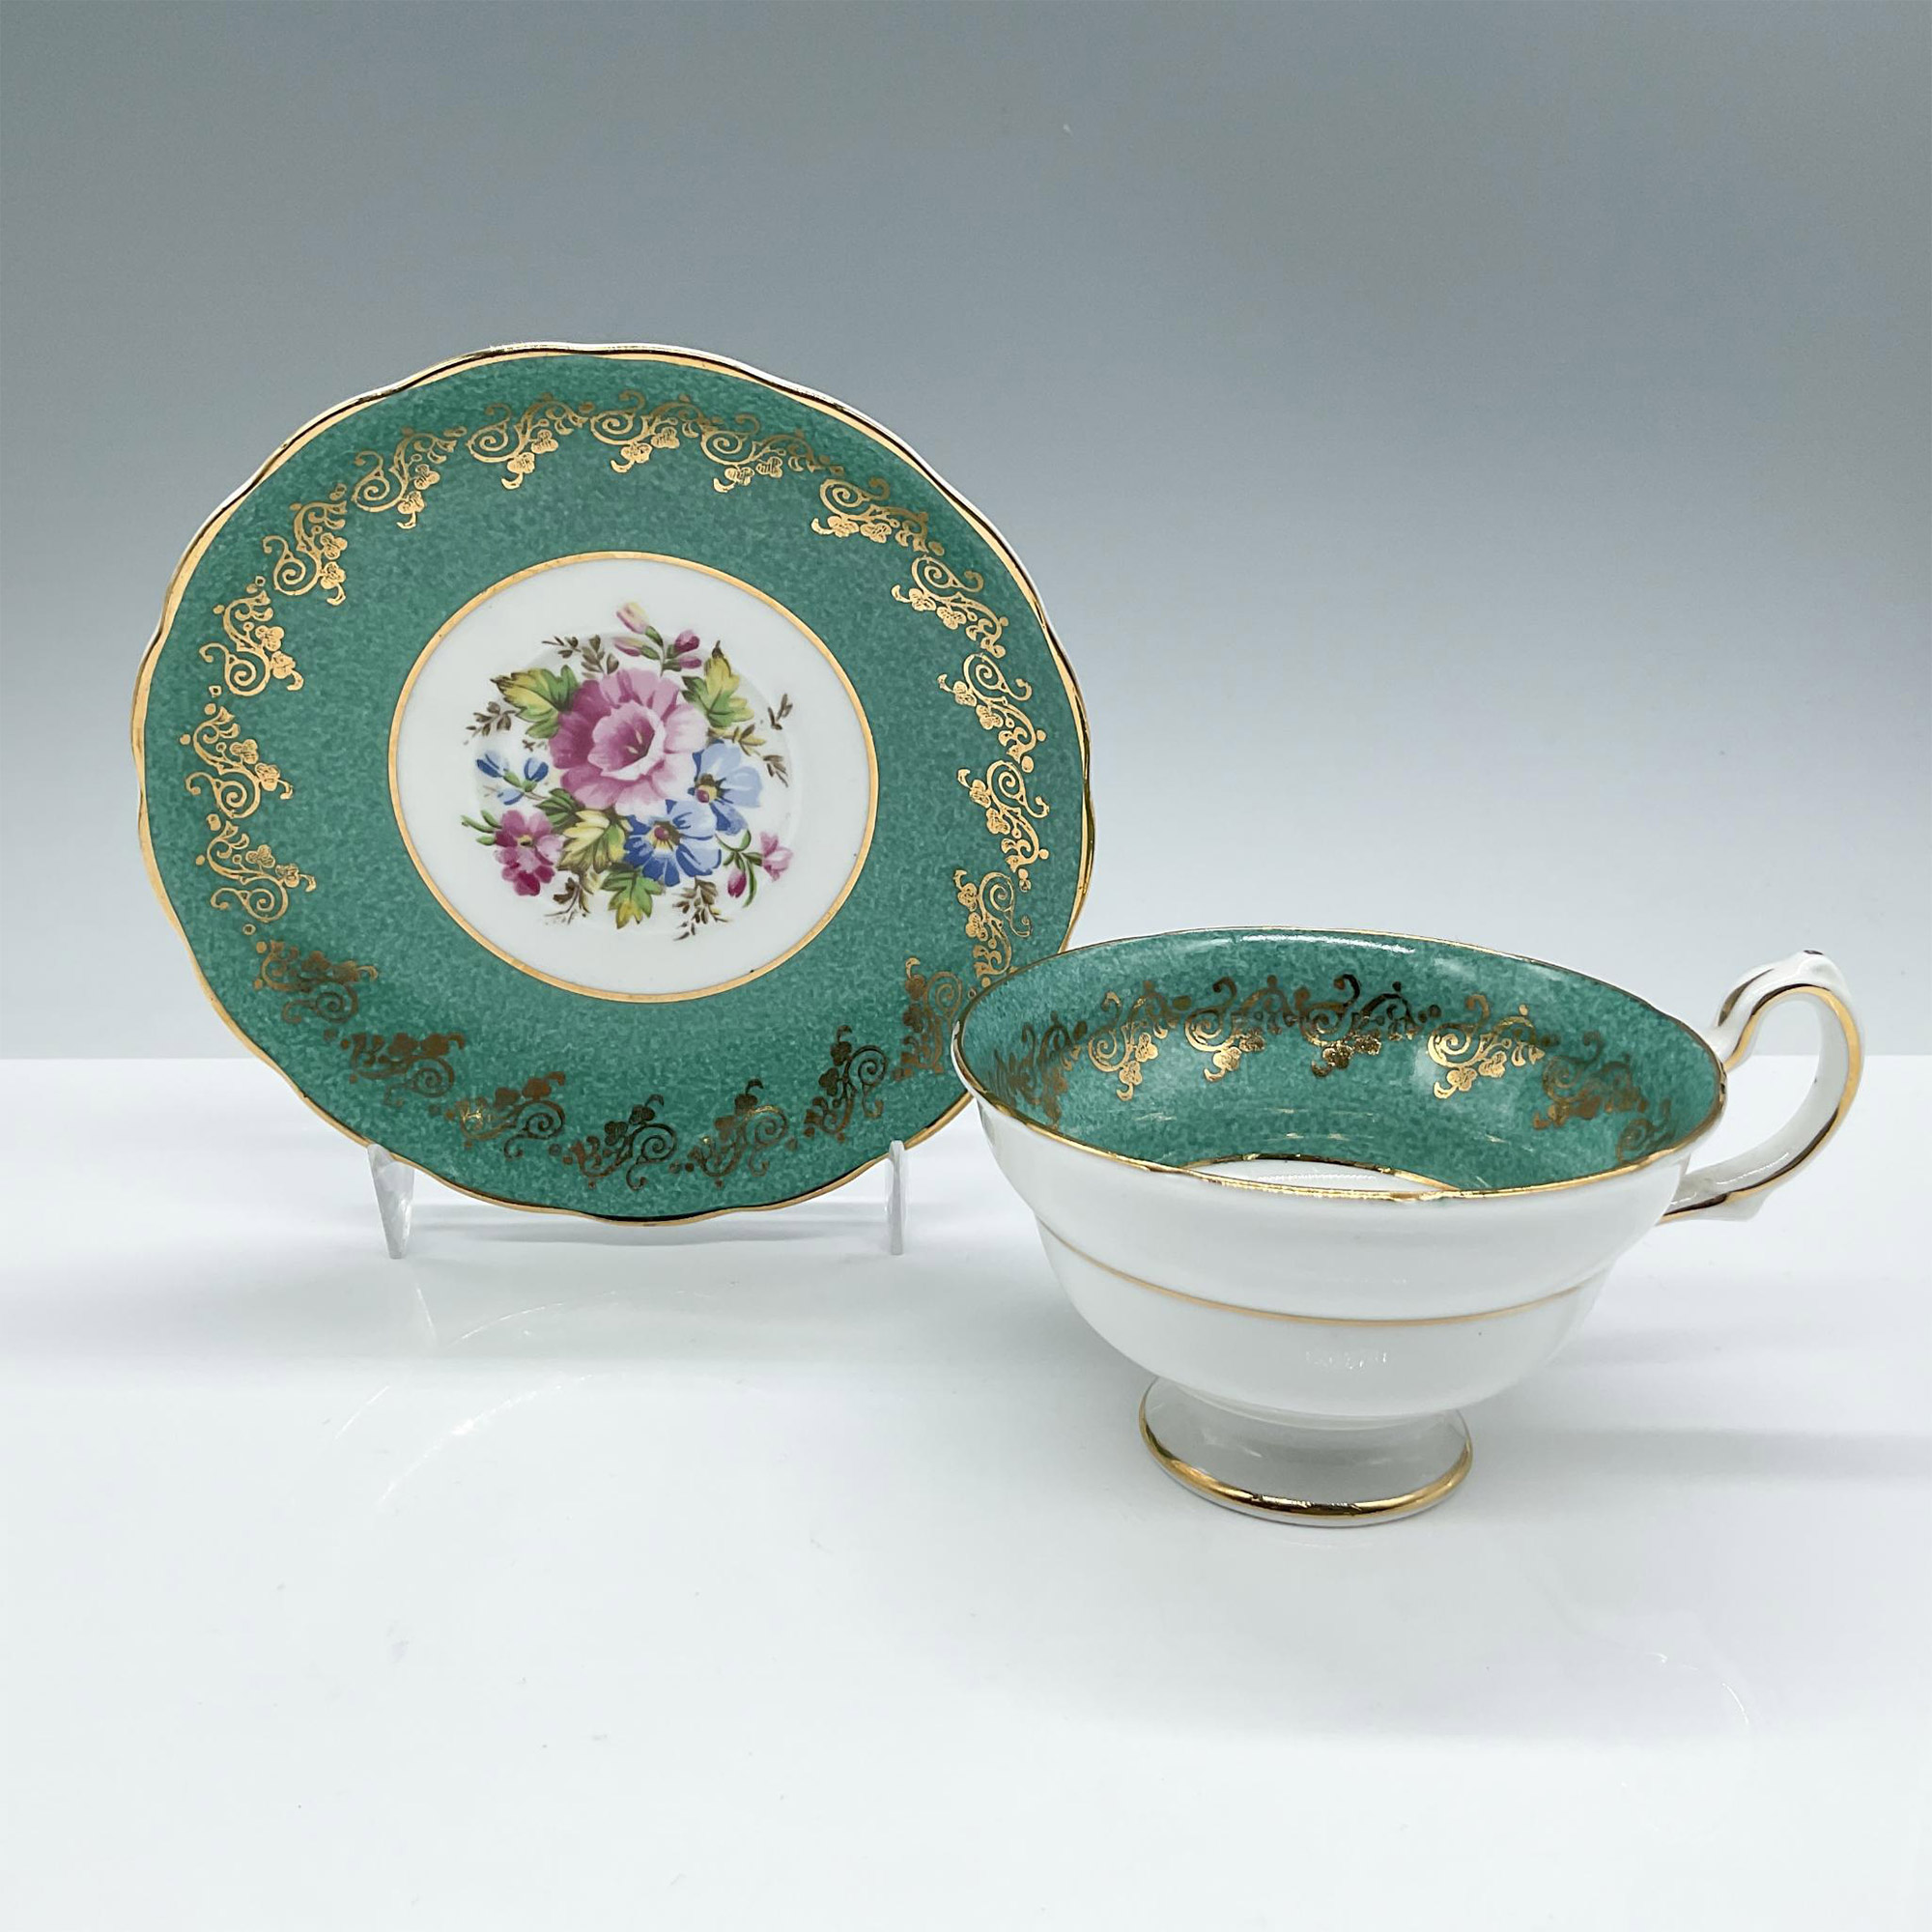 Vintage Grosvernor Bone China Tea Cup and Saucer, Teal - Image 3 of 4